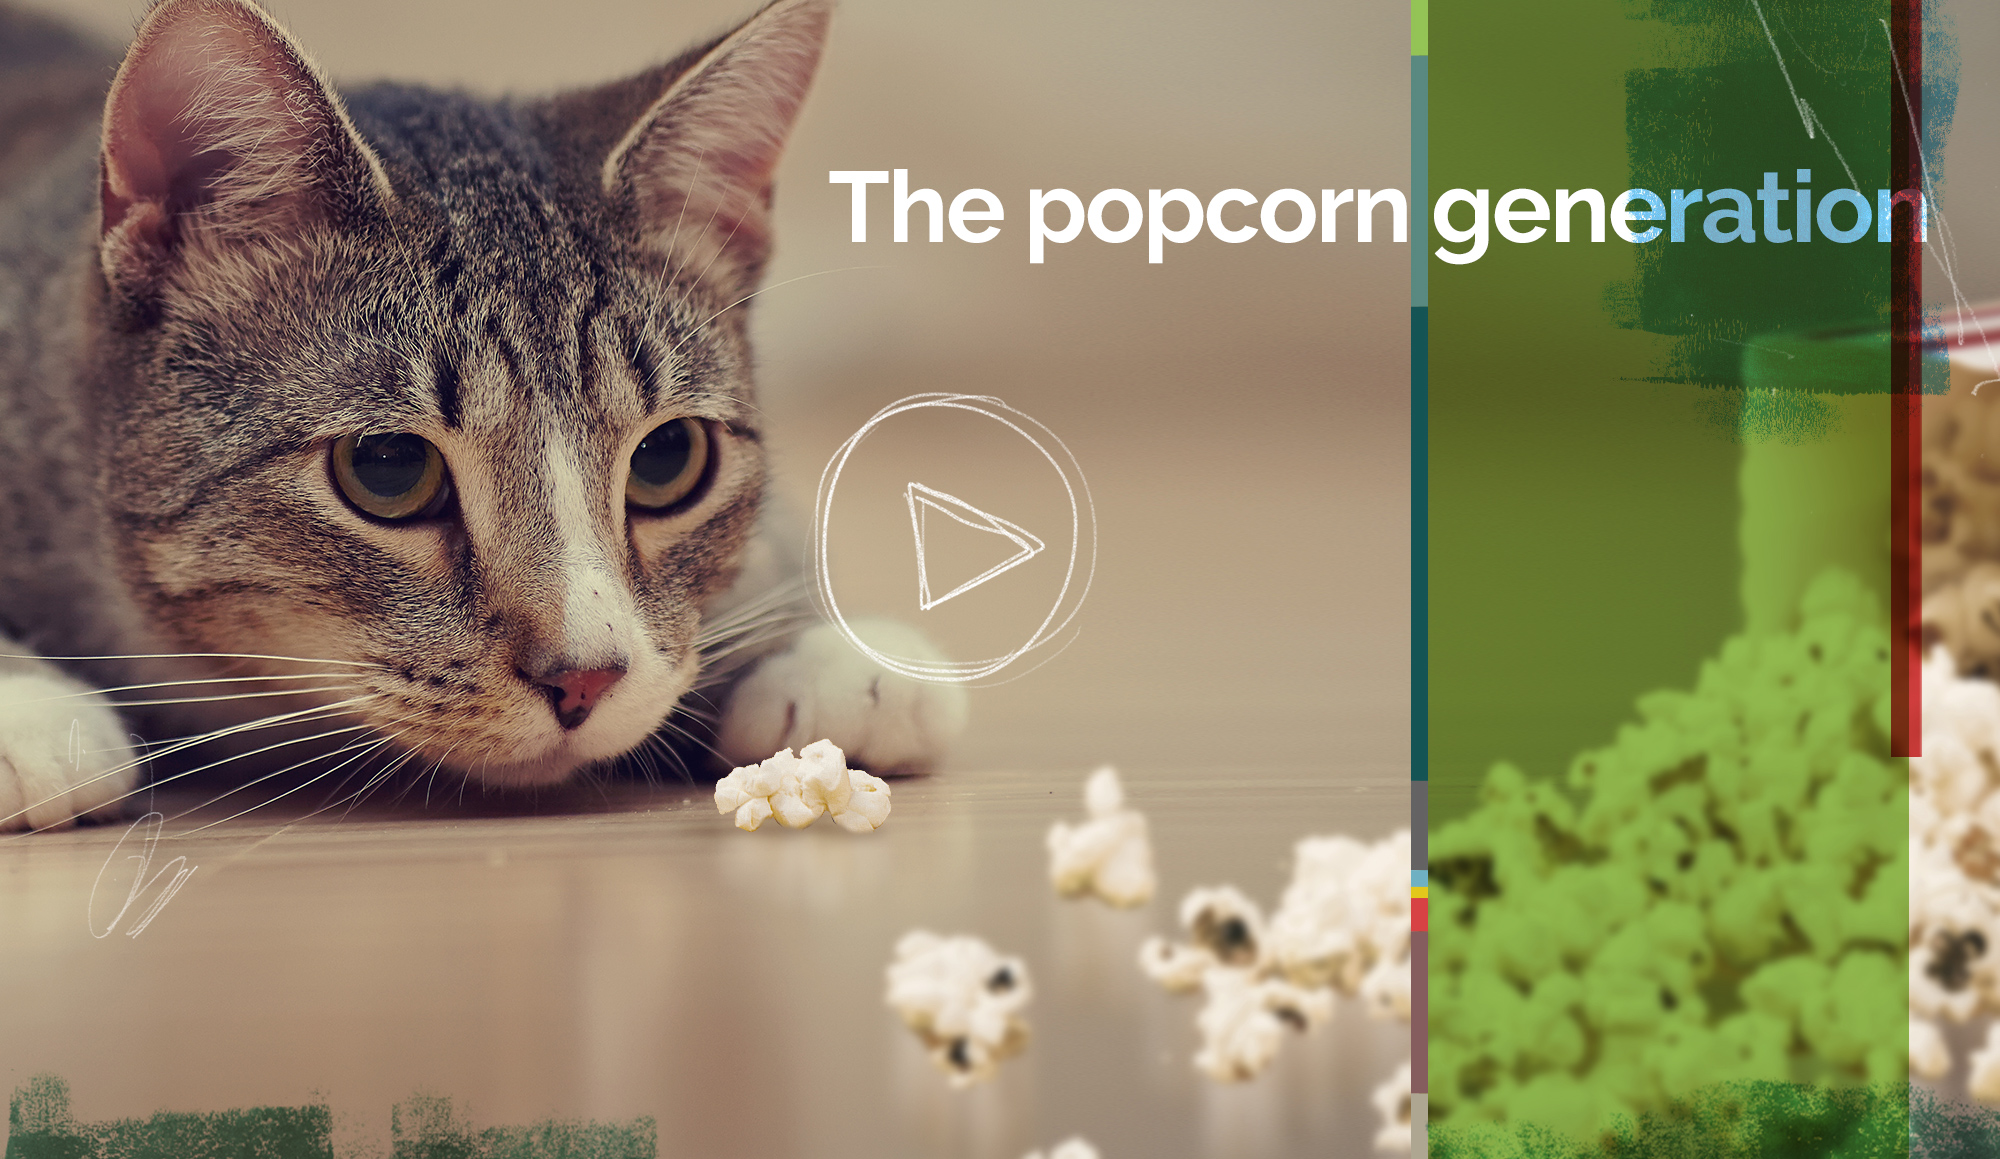 The popcorn generation